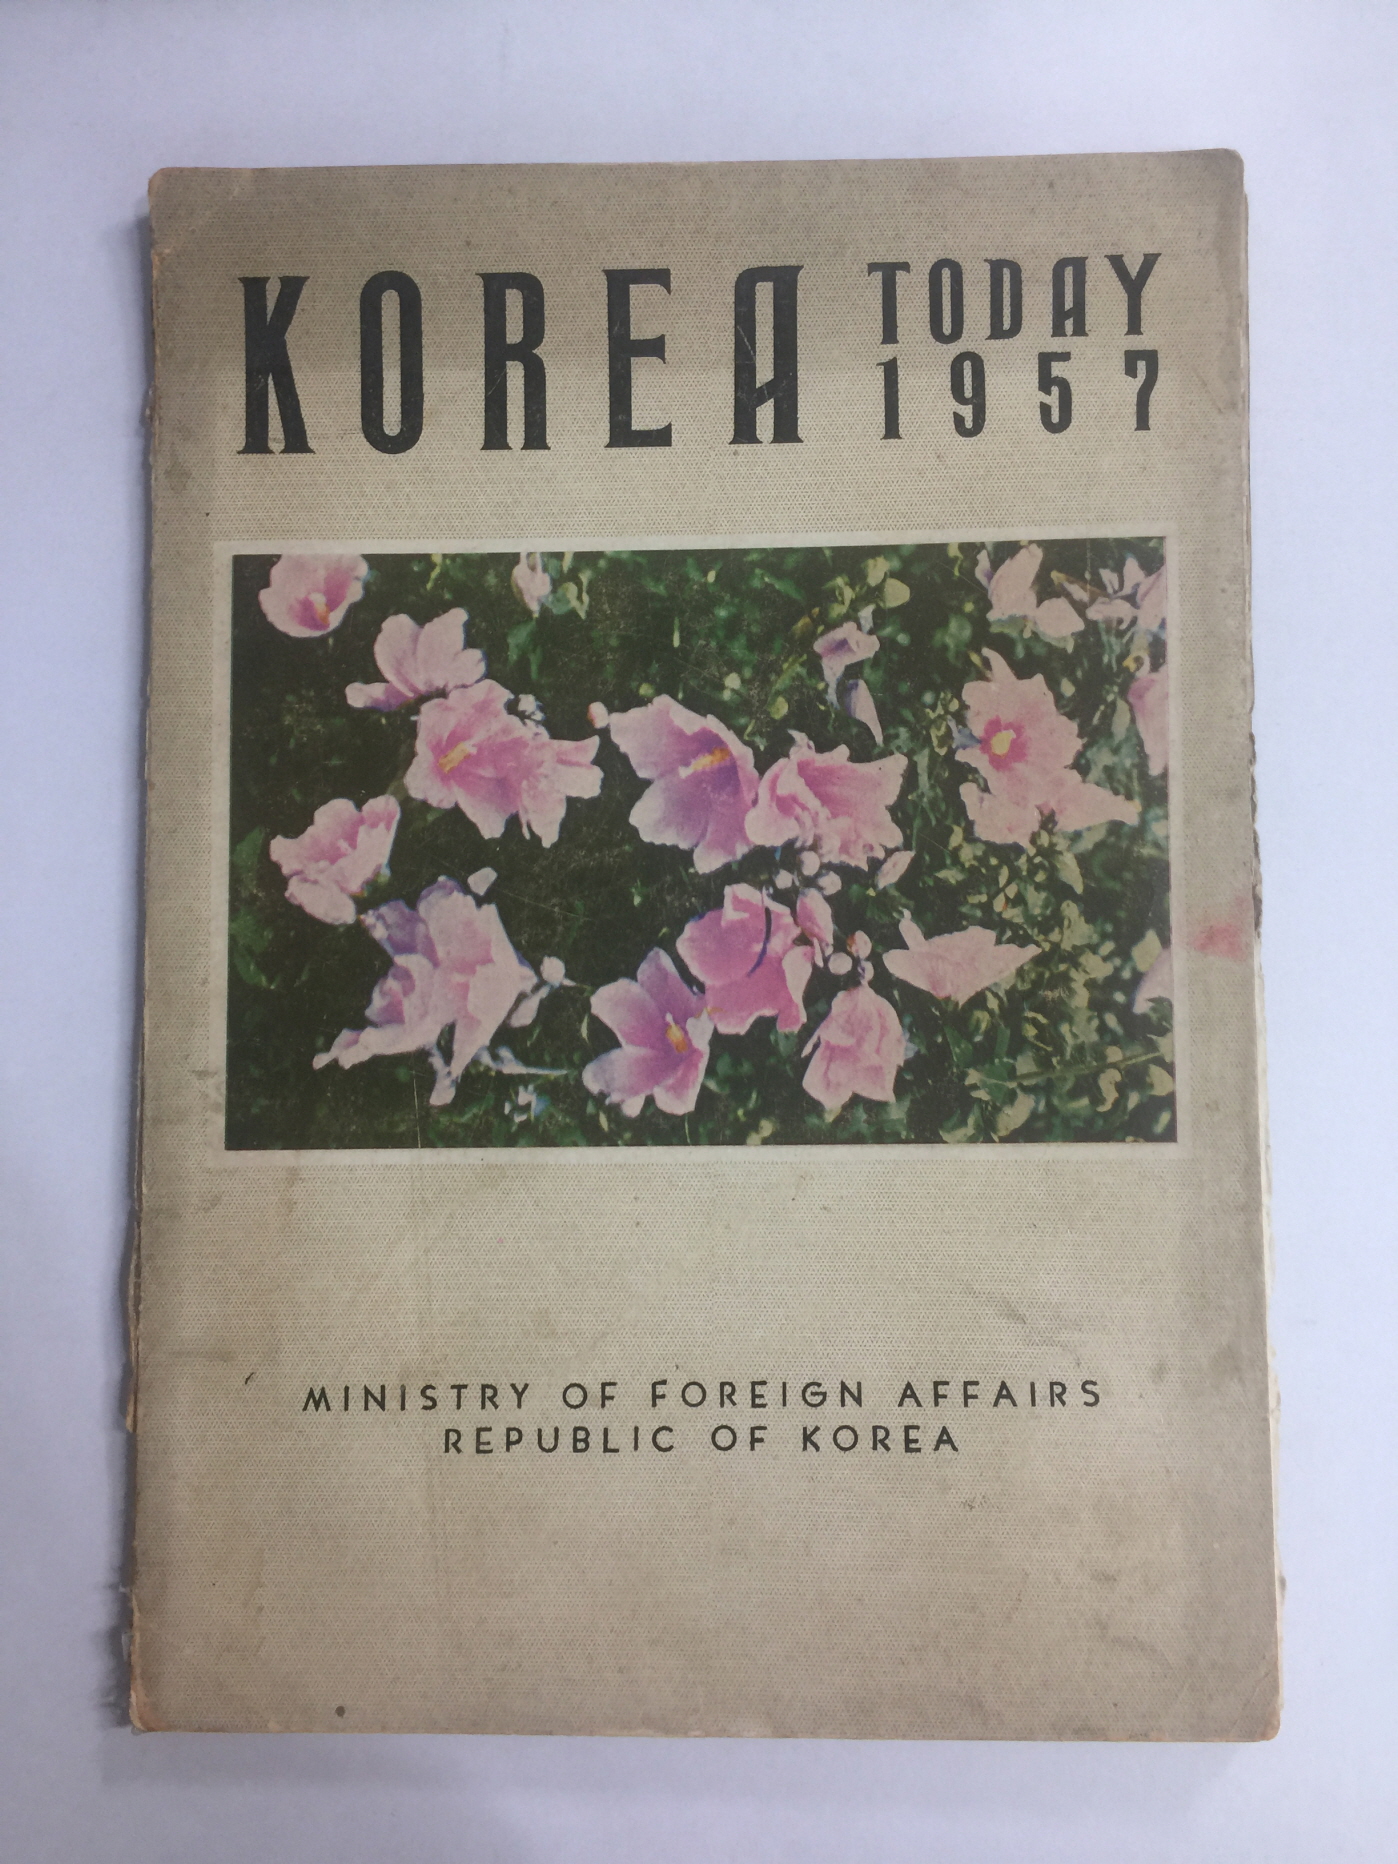 KOREA TODAY 1957